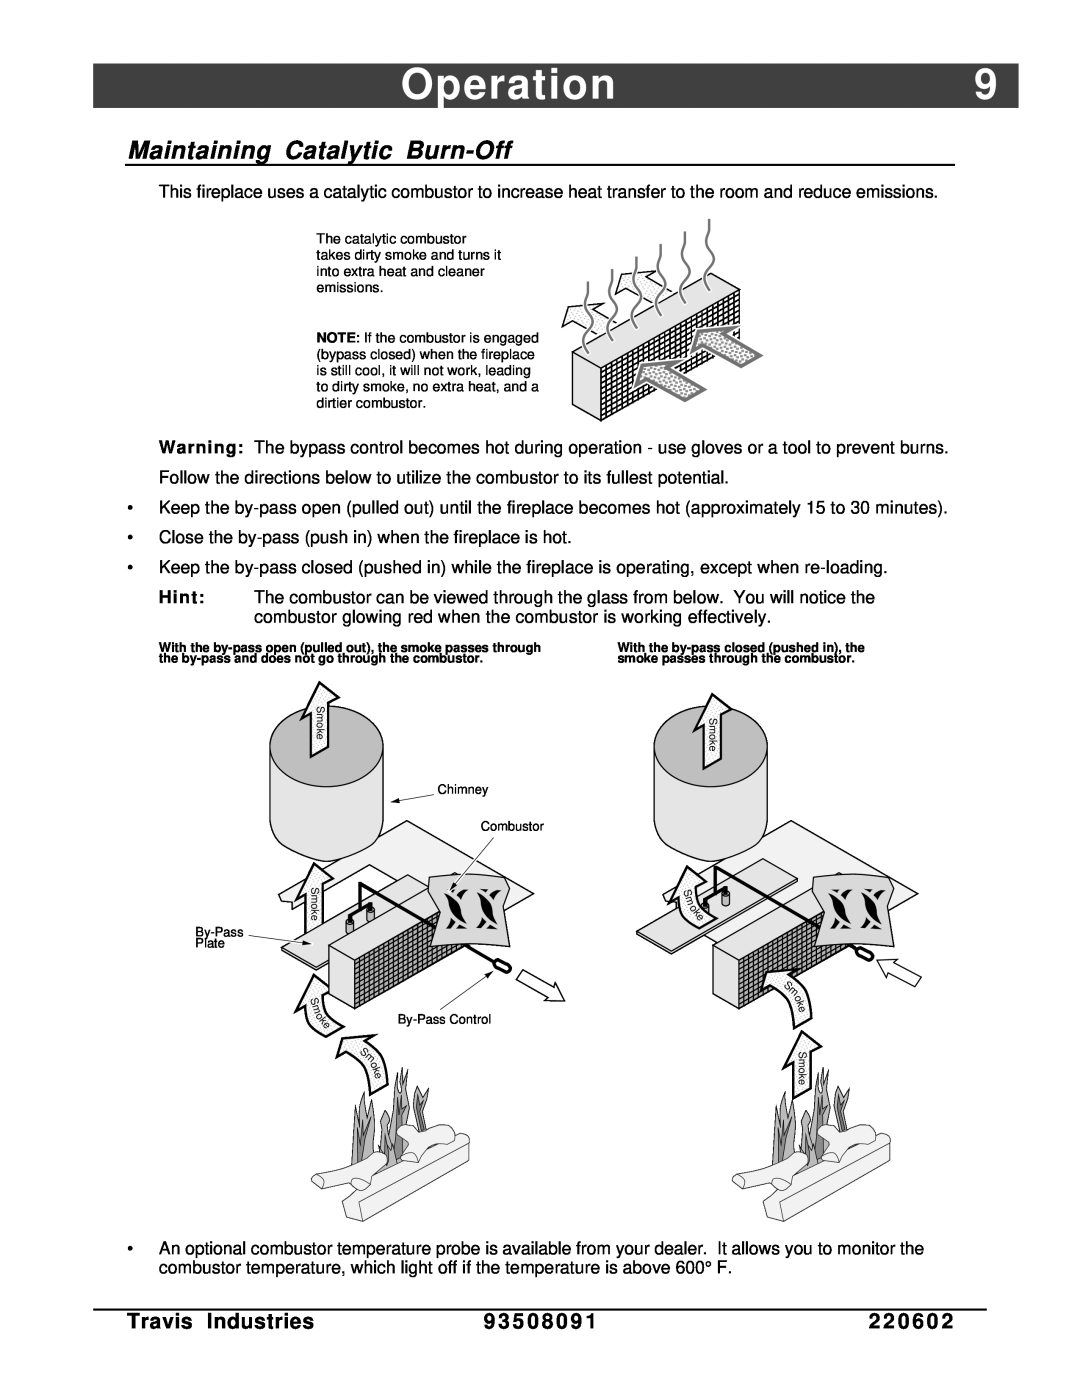 FireplaceXtrordinair 36-Elite owner manual Operation9, Maintaining Catalytic Burn-Off, Travis Industries 